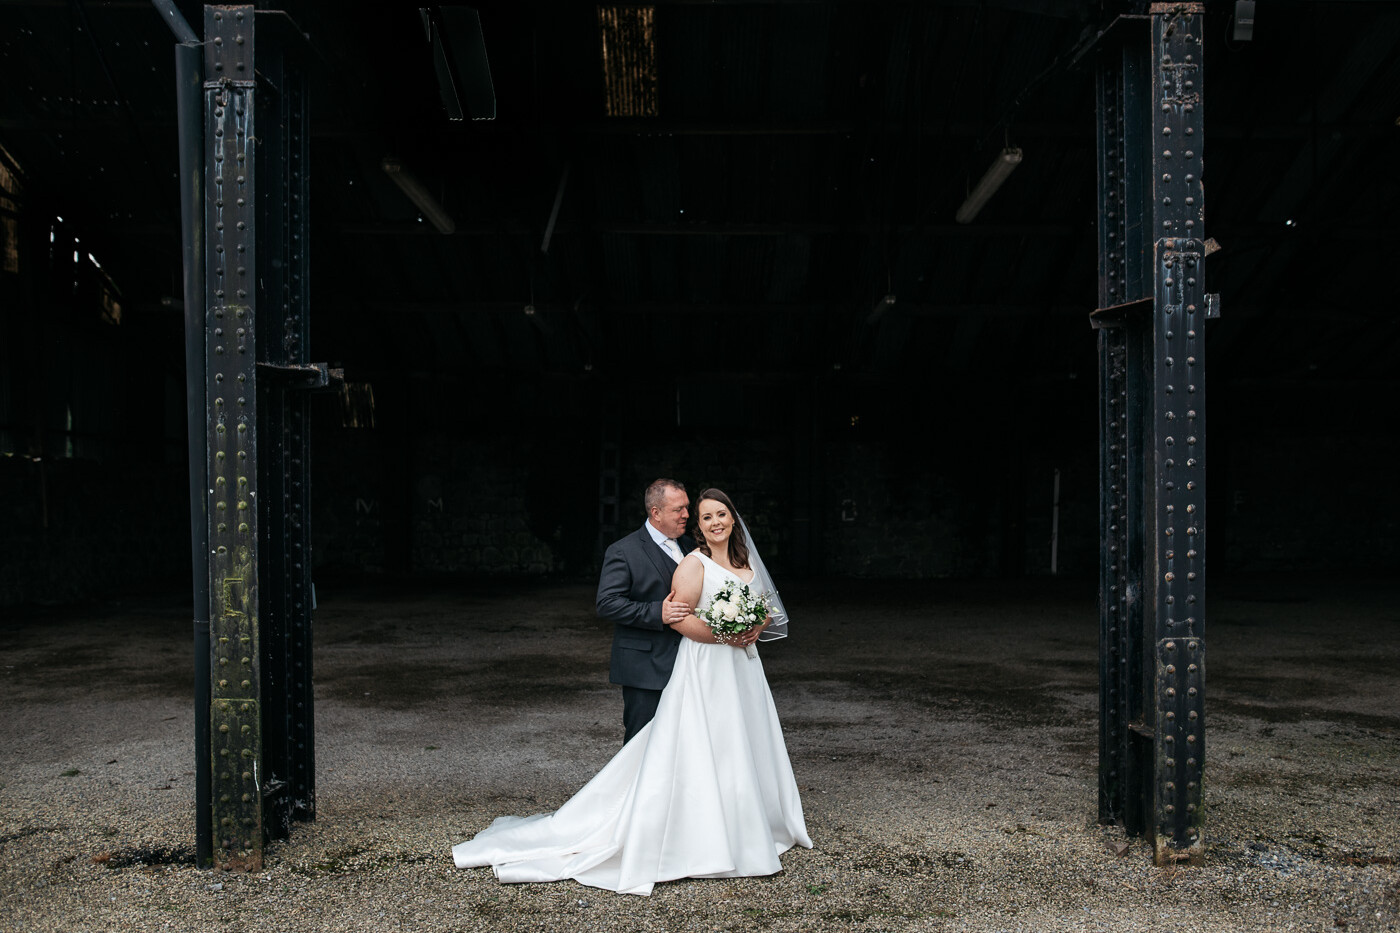 Wedding photographers in Dublin 13 12 2021 13